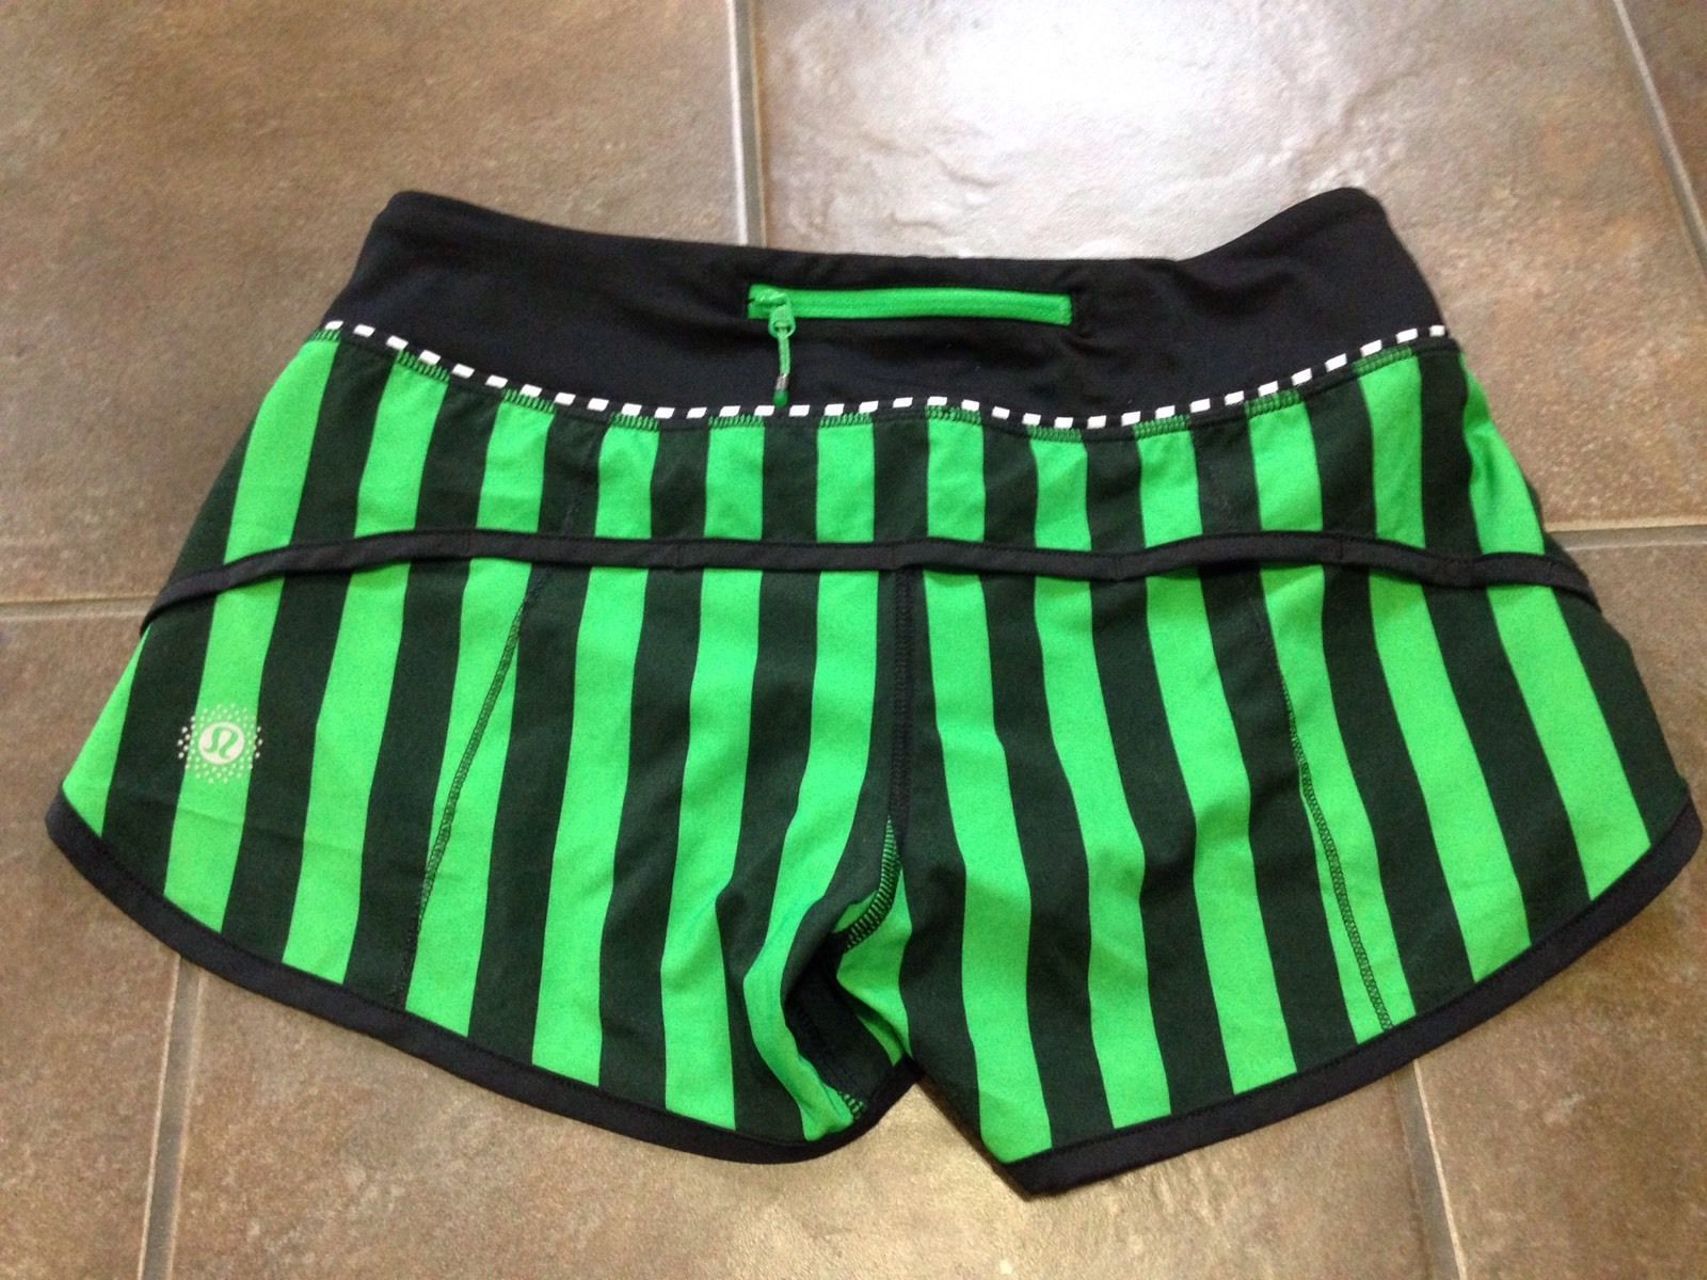 Lululemon Speed Short - 2015 Seawheeze - Green/Black Vertical Stripe